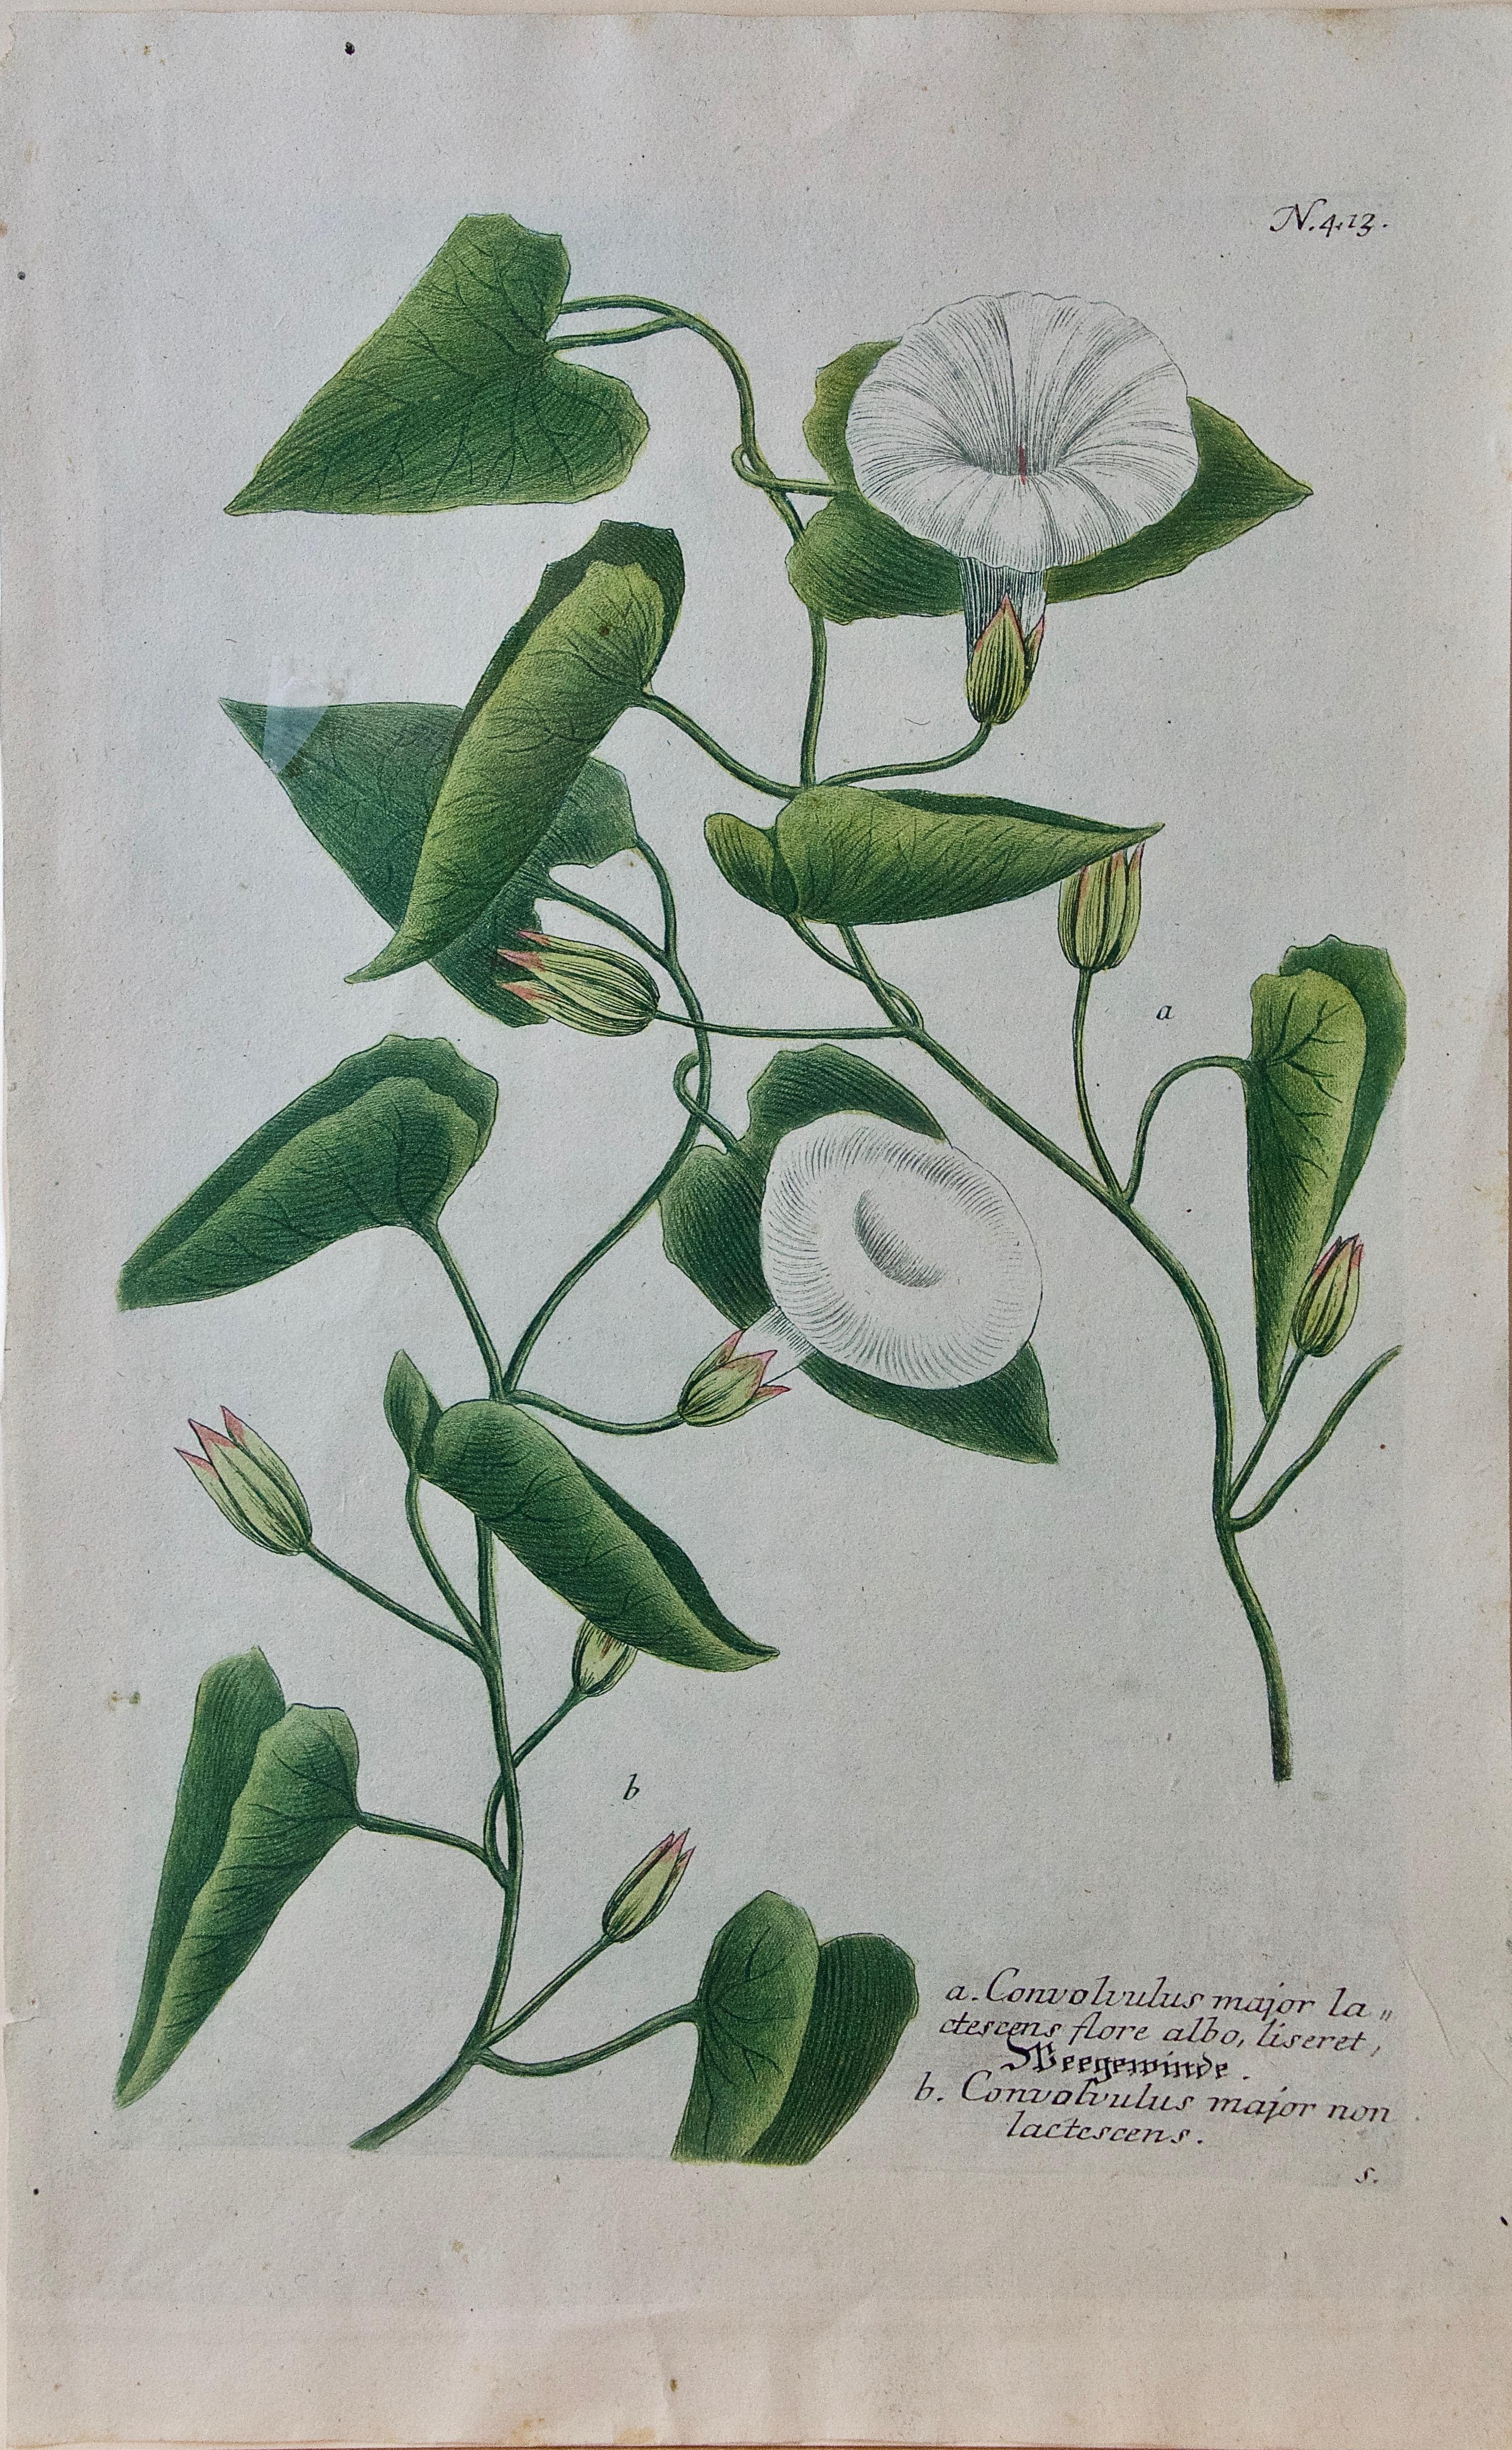 Weinmann 18th Century Hand Colored Botanical Engraving "Convolvulus" (Bindweed)